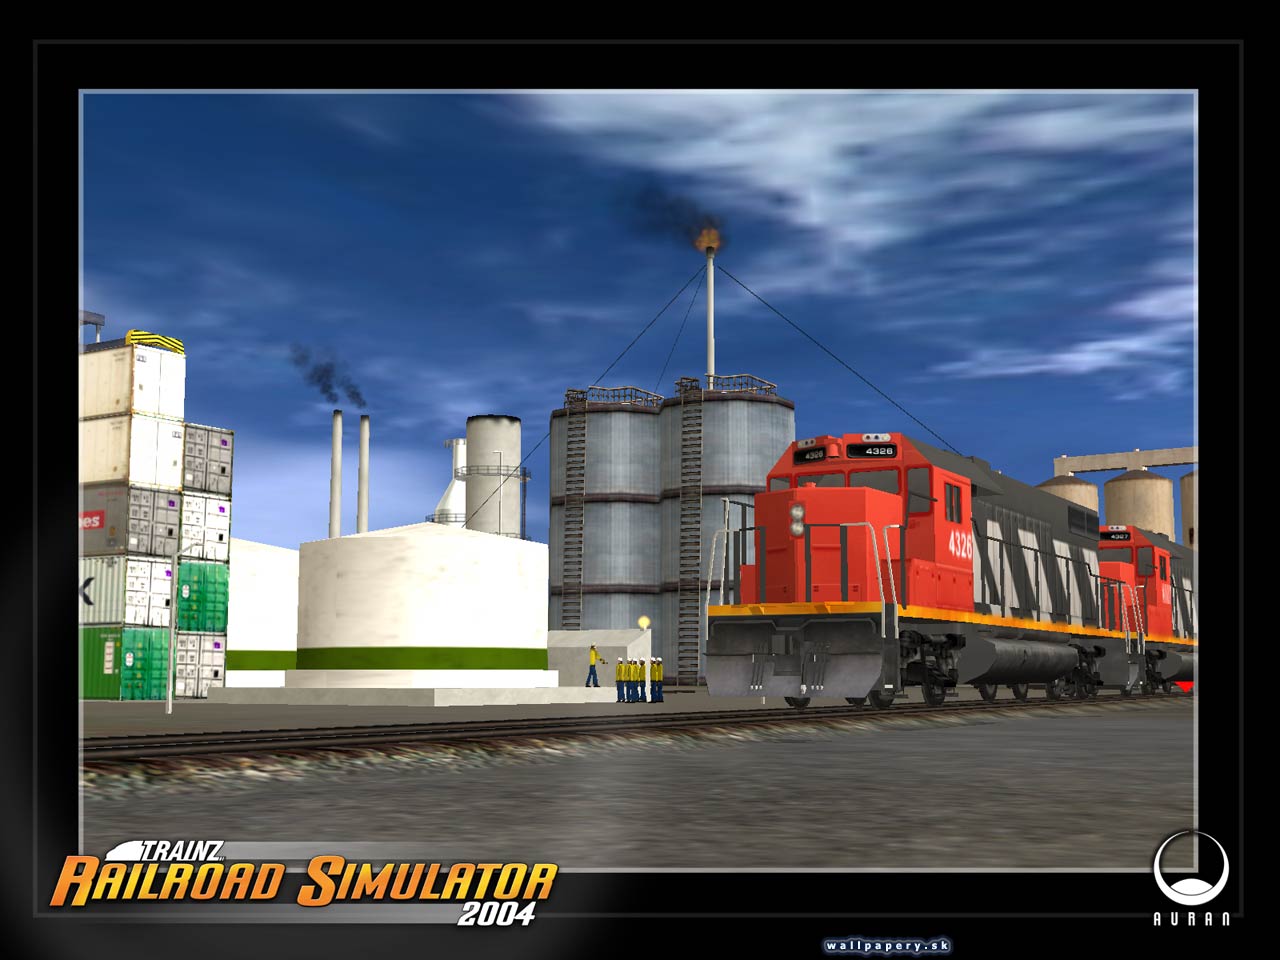 Trainz Railroad Simulator 2004 - wallpaper 6